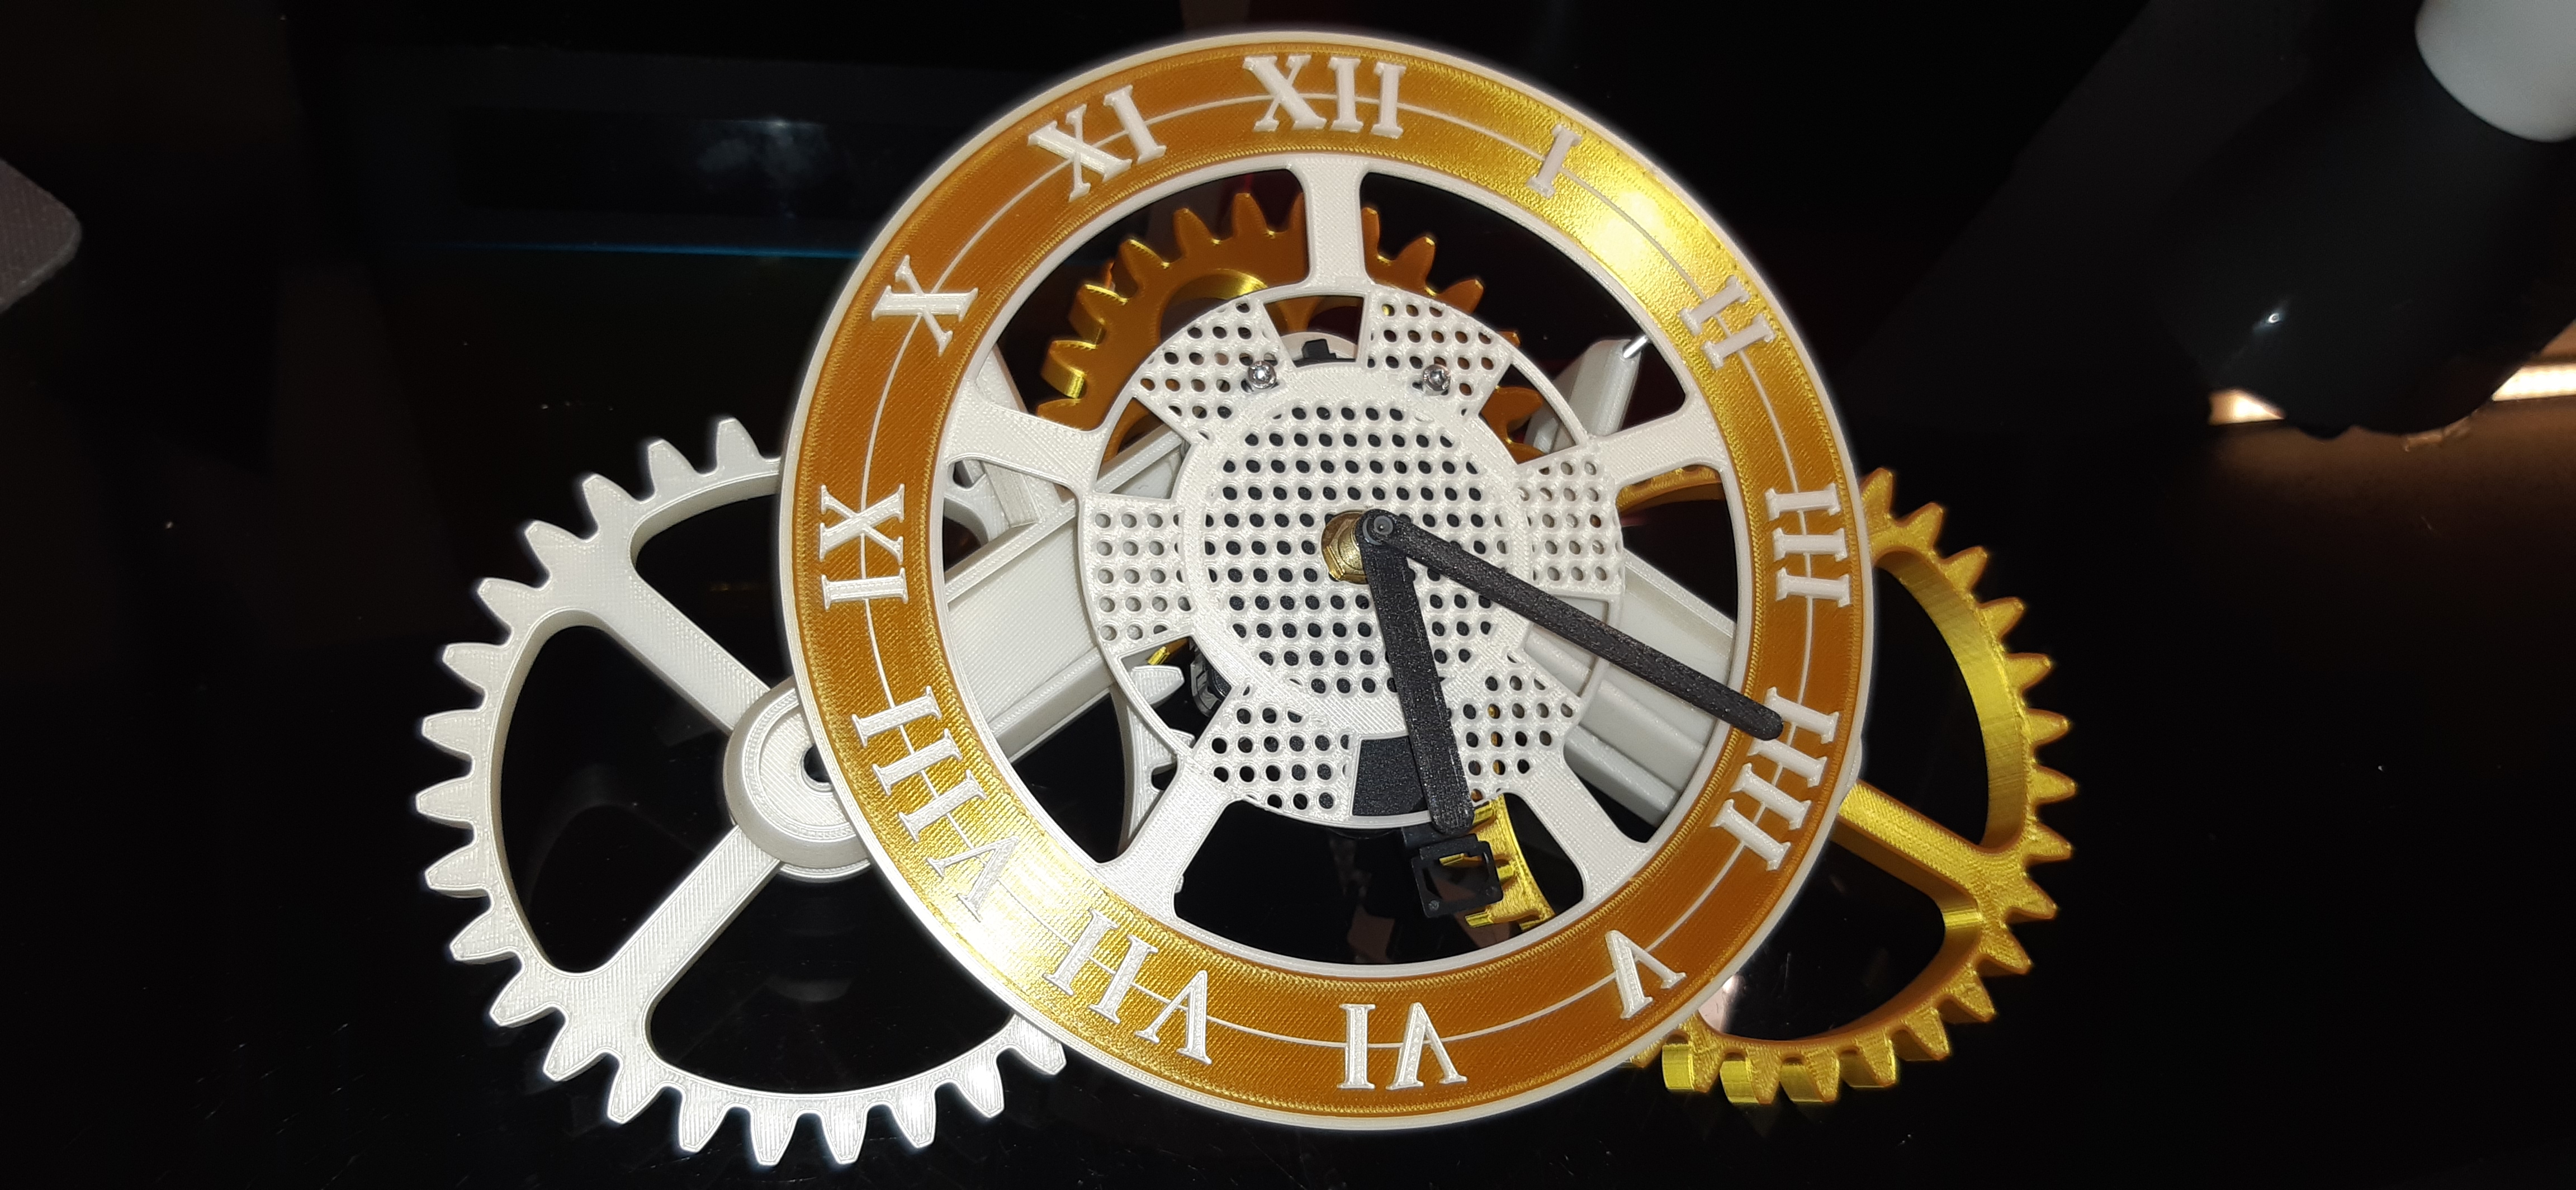 Steampunk clock